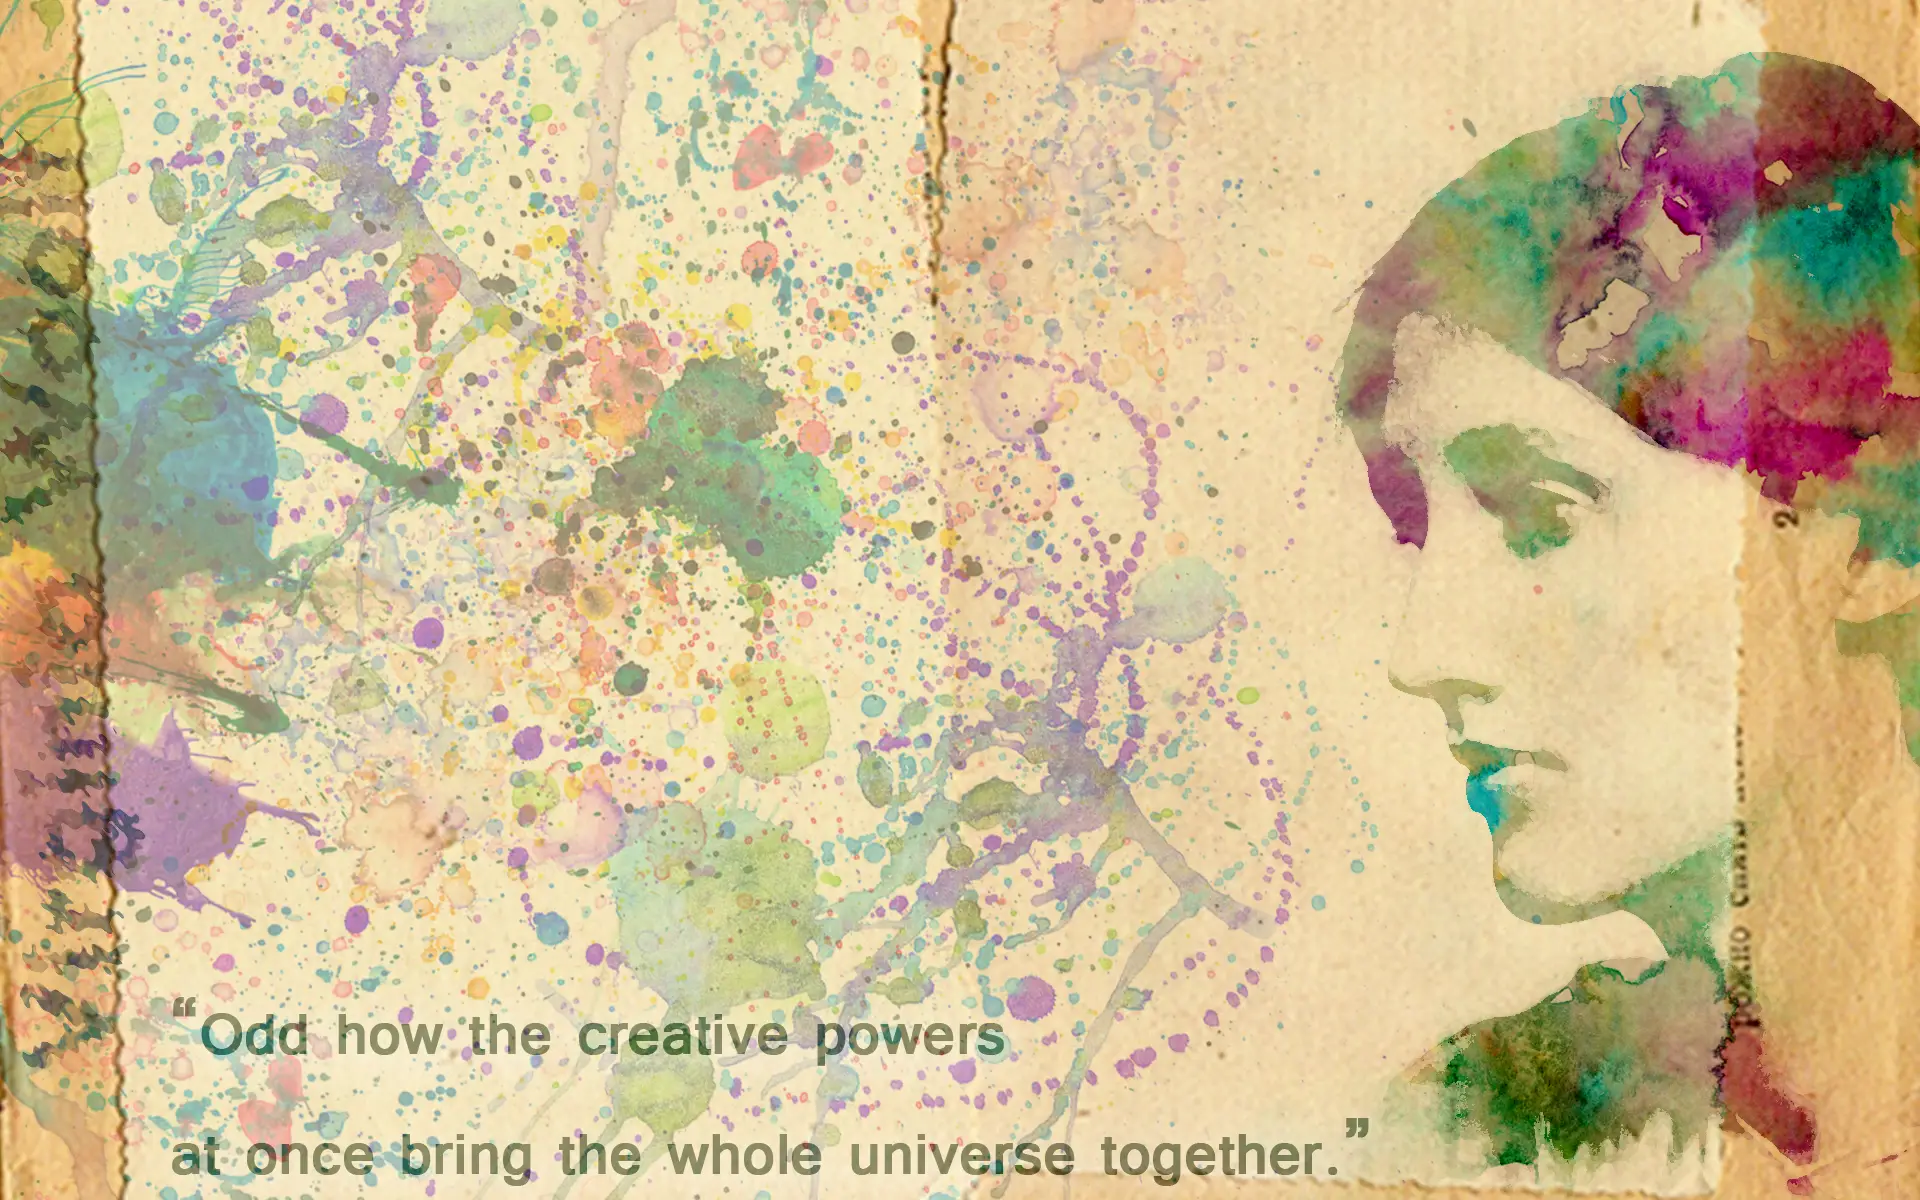 30 Memorable Virginia Woolf Quotes About Understanding Life